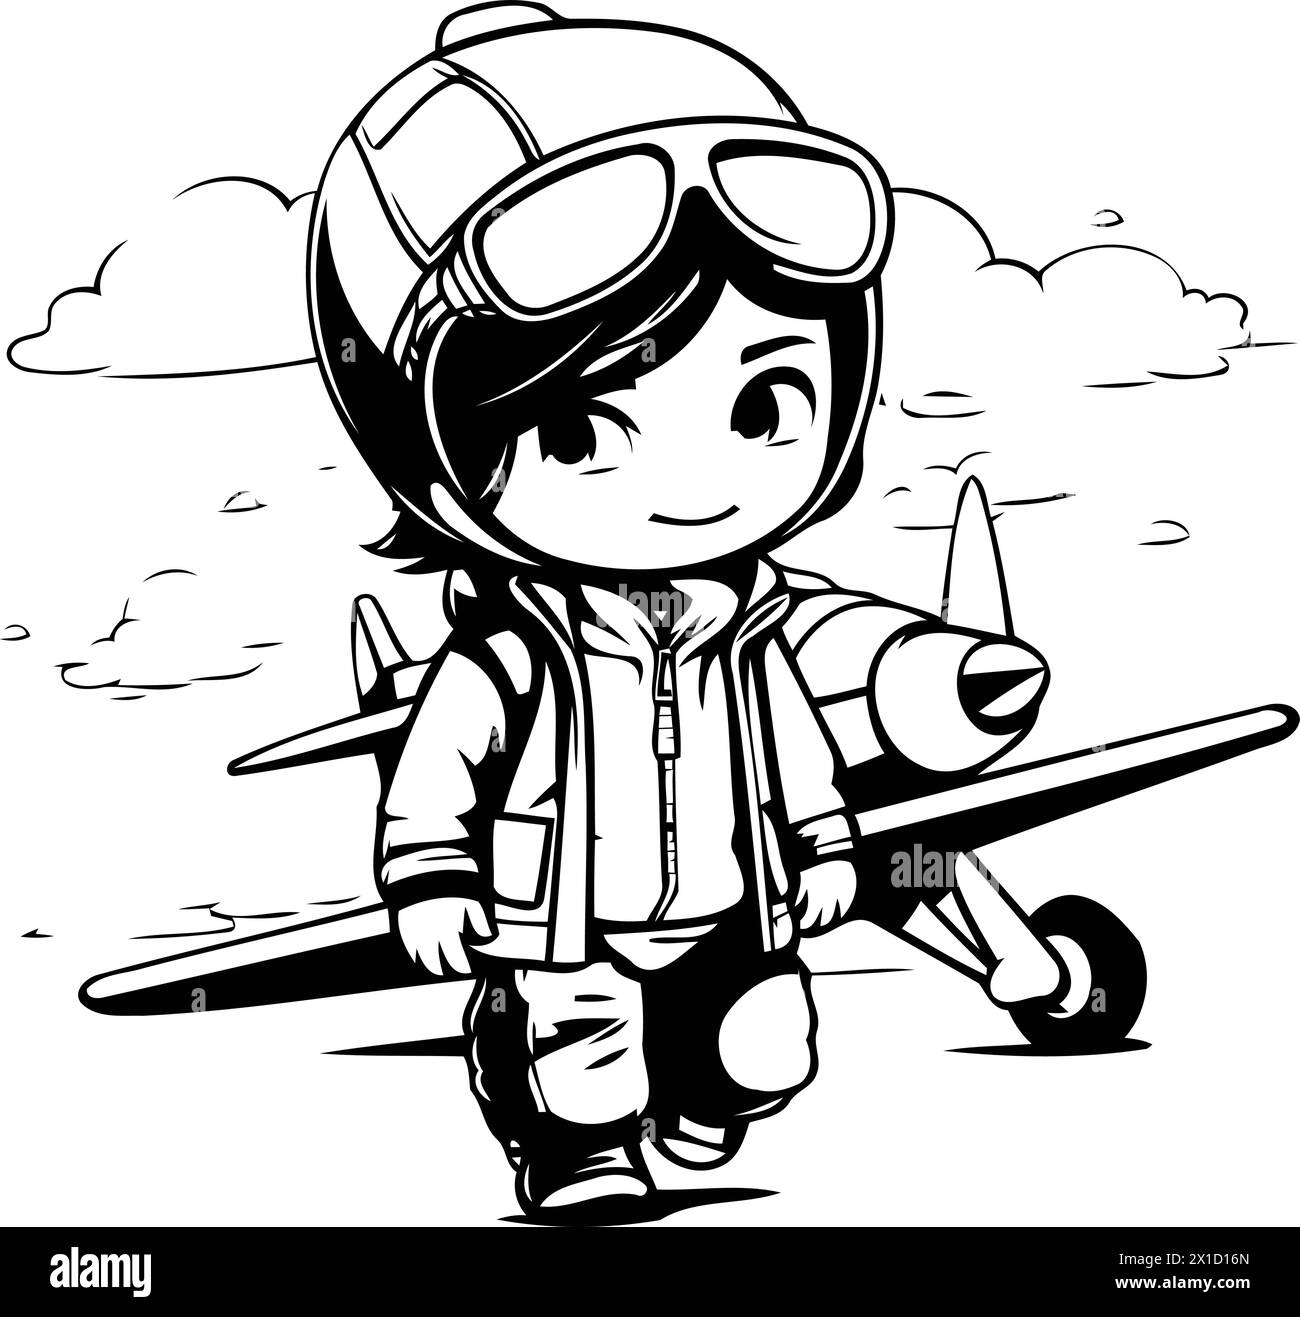 Cute little boy in aviator helmet and airplane. Vector illustration. Stock Vector